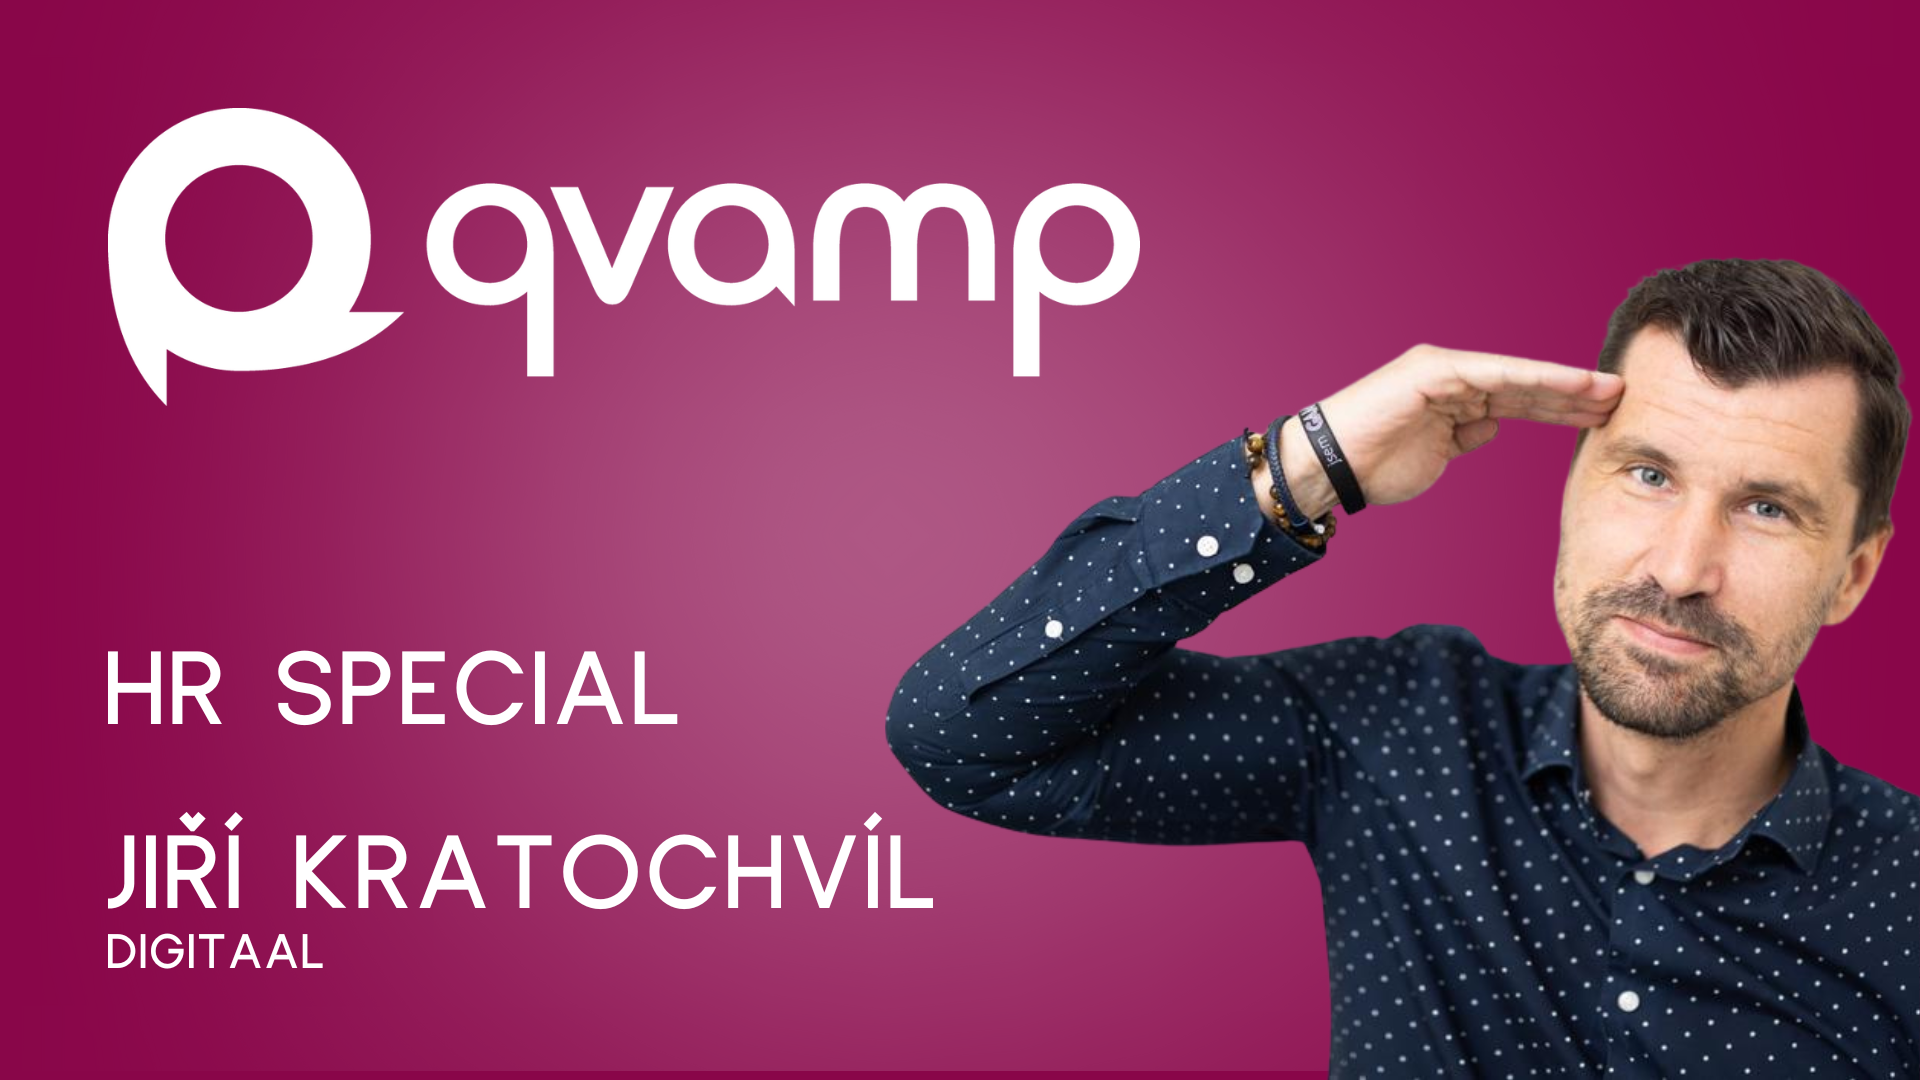 Qvamp blog 2 - HR Special, Jiri Kratochvil